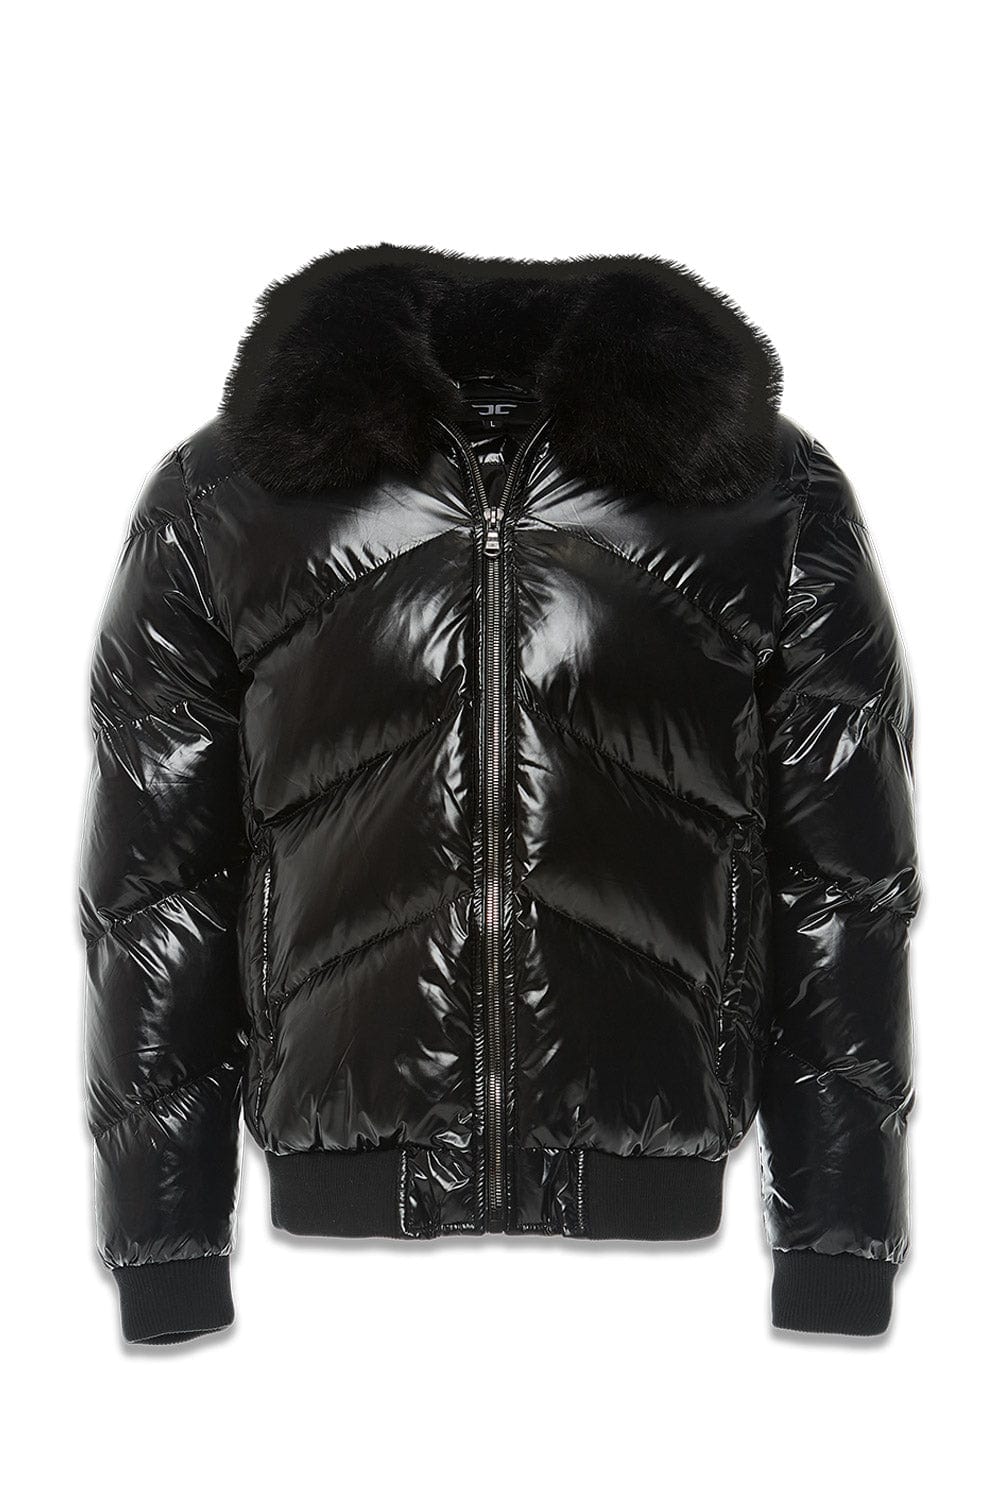 Jordan Craig Lenox Nylon Puffer Jacket (Black) S / Black